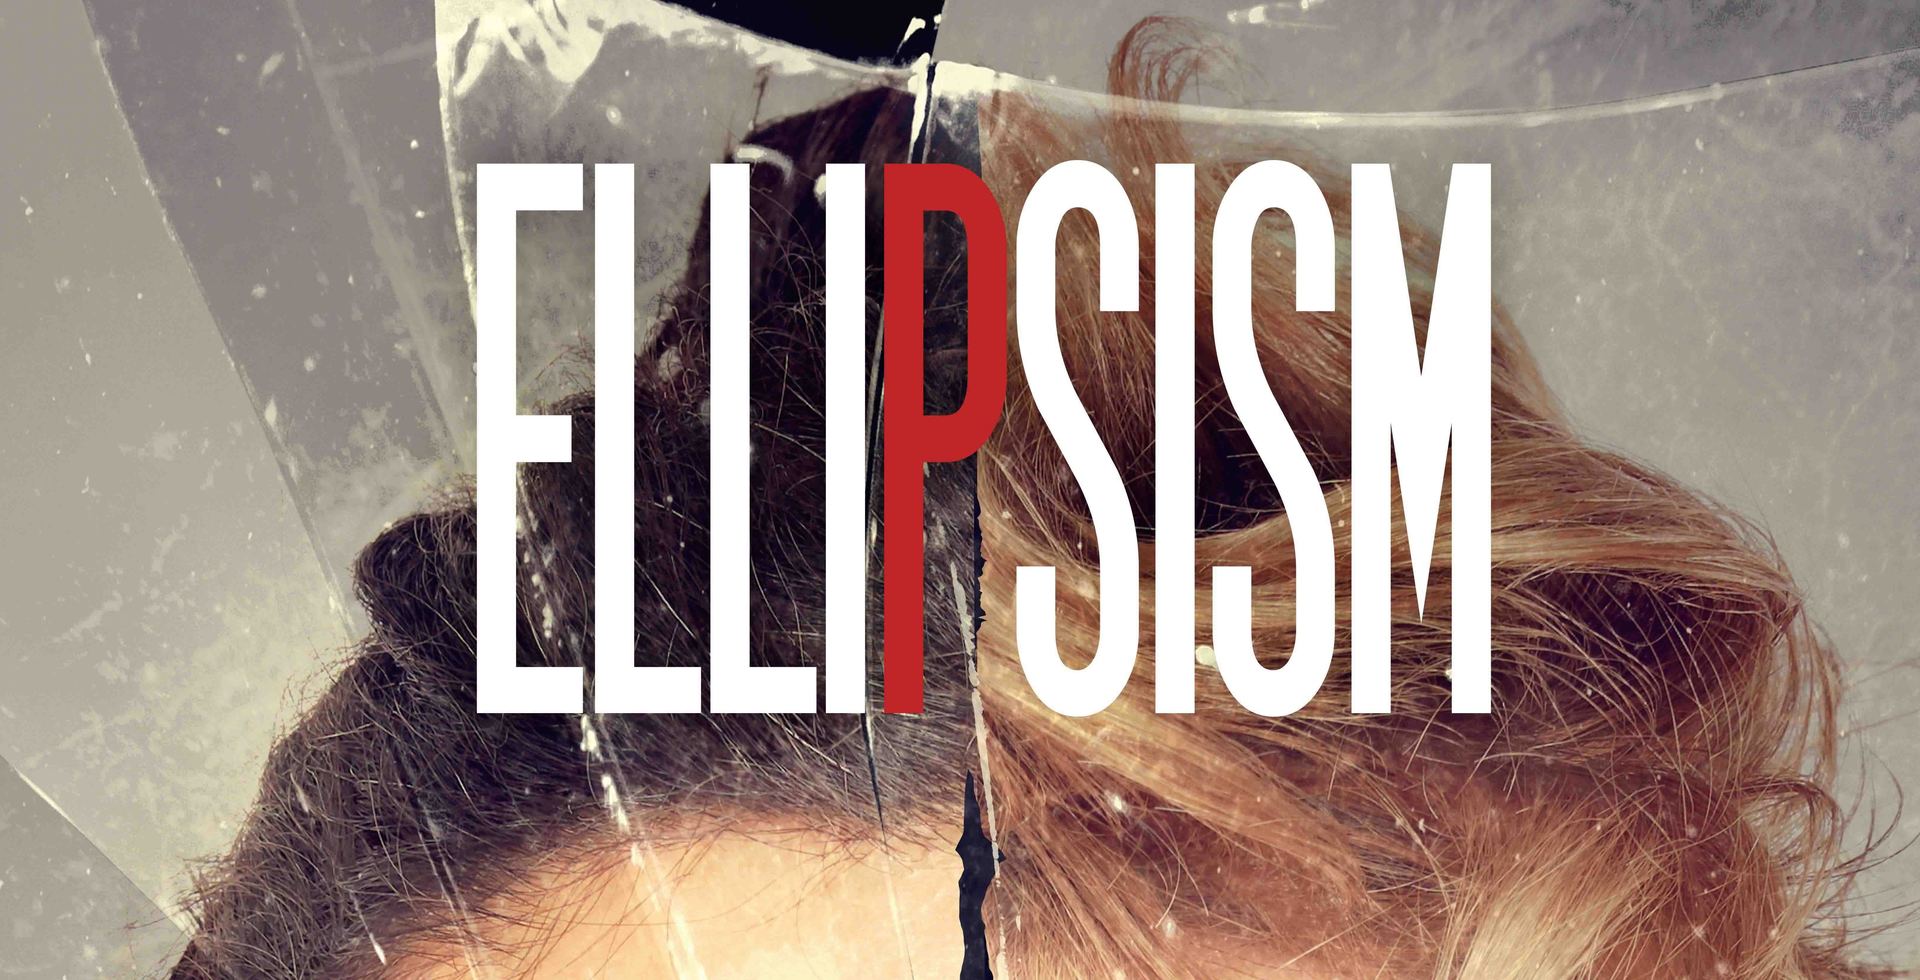 header image of the shortmovie of Ellipsism